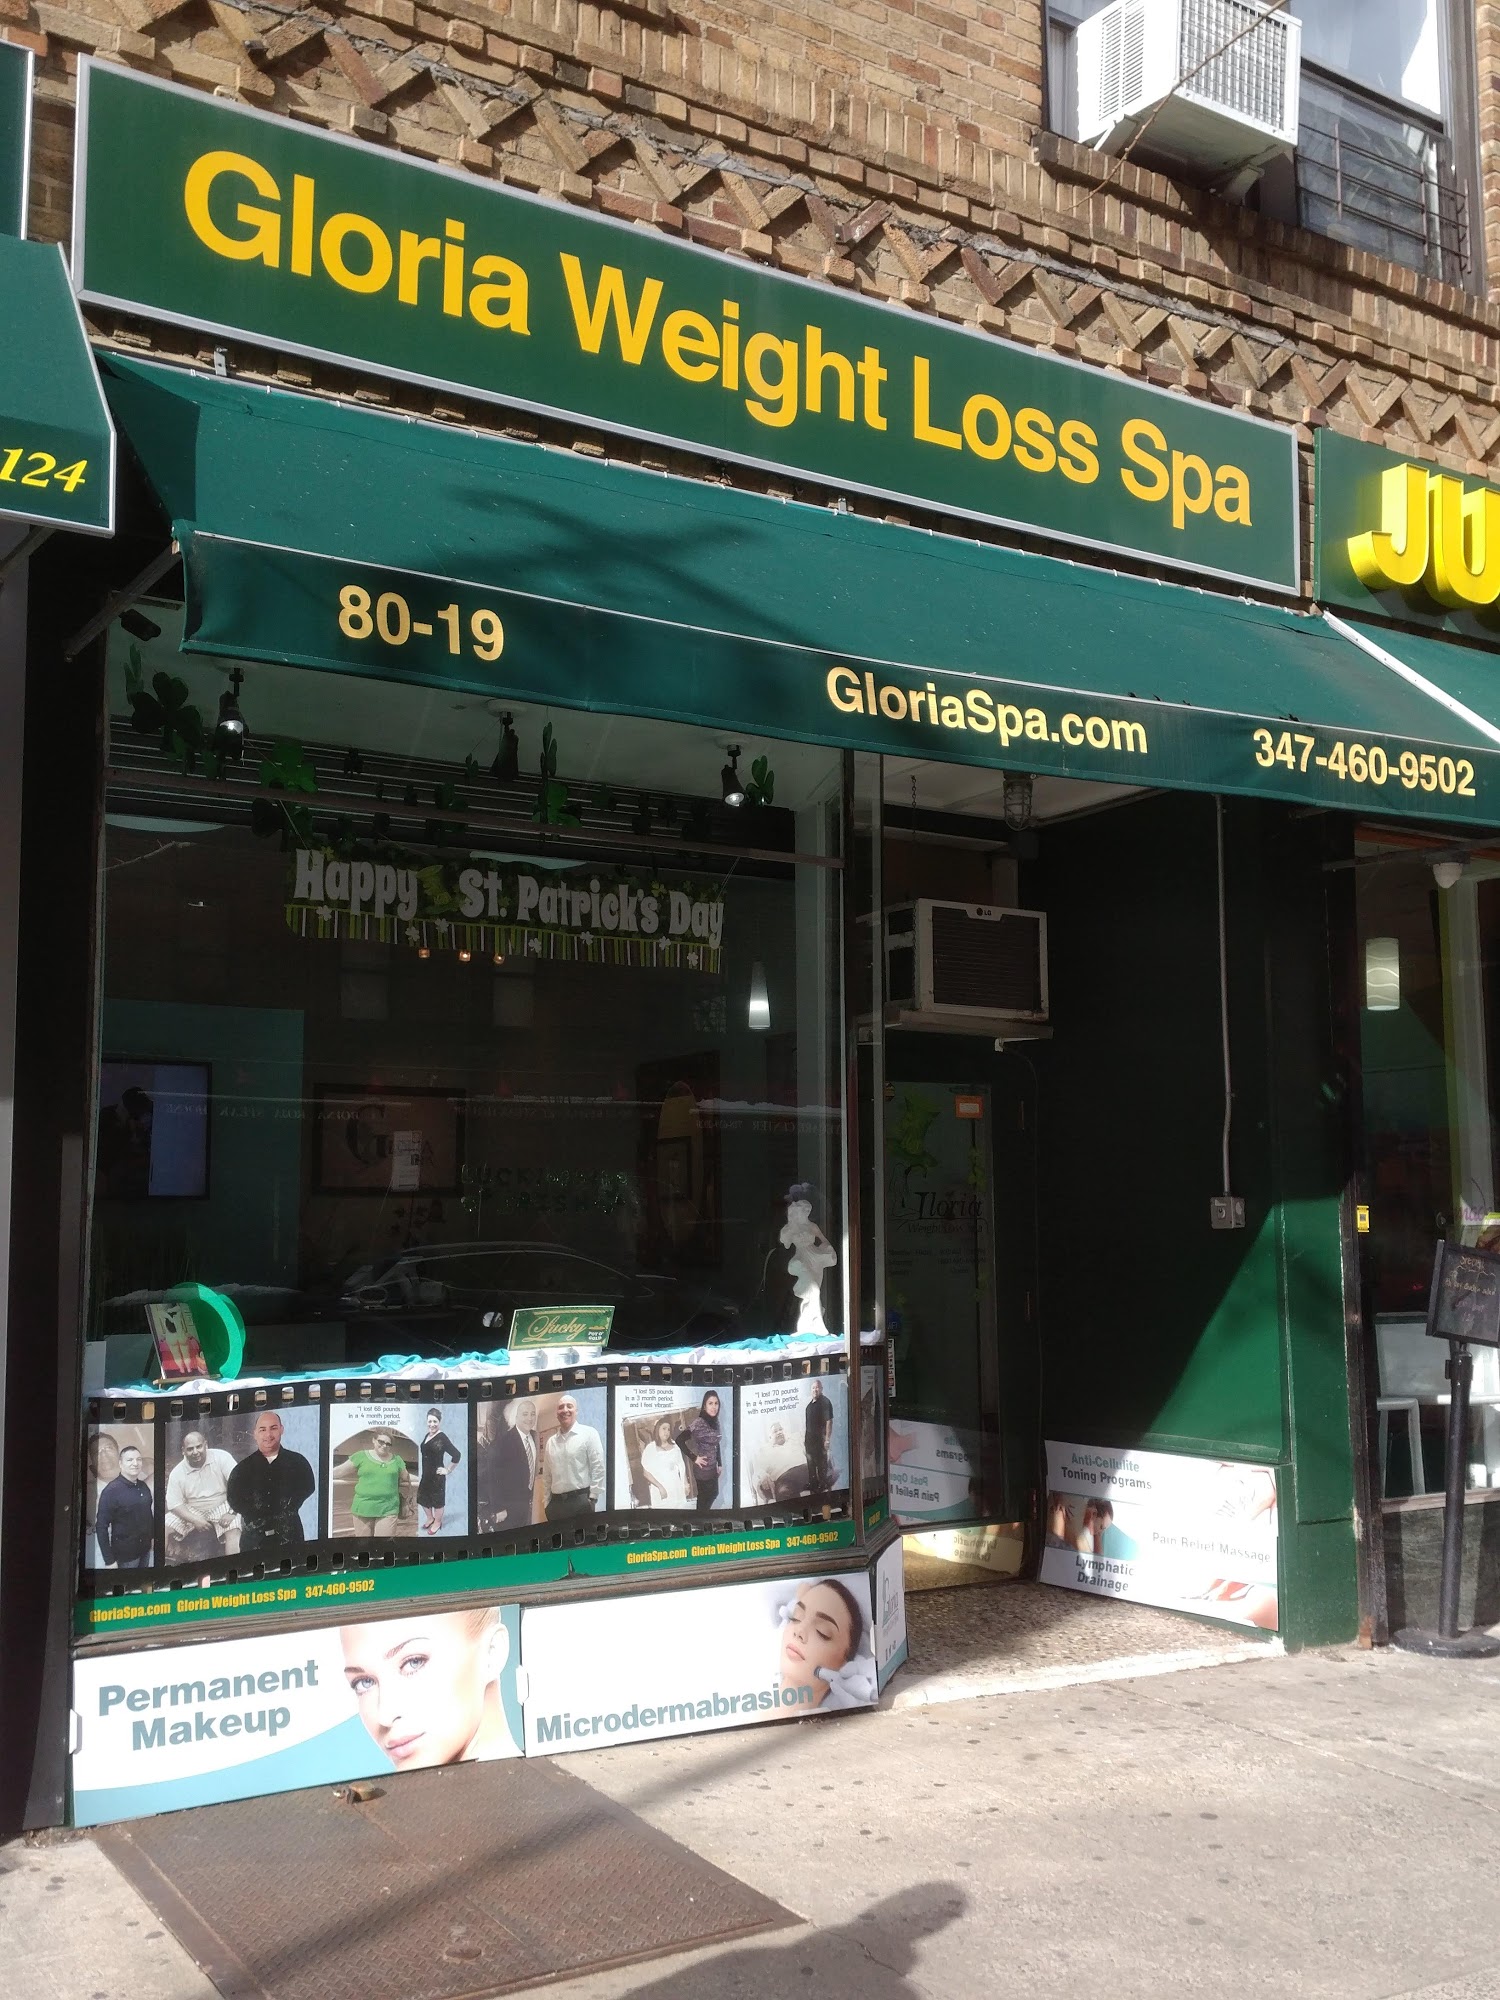 Gloria Weight Loss Spa